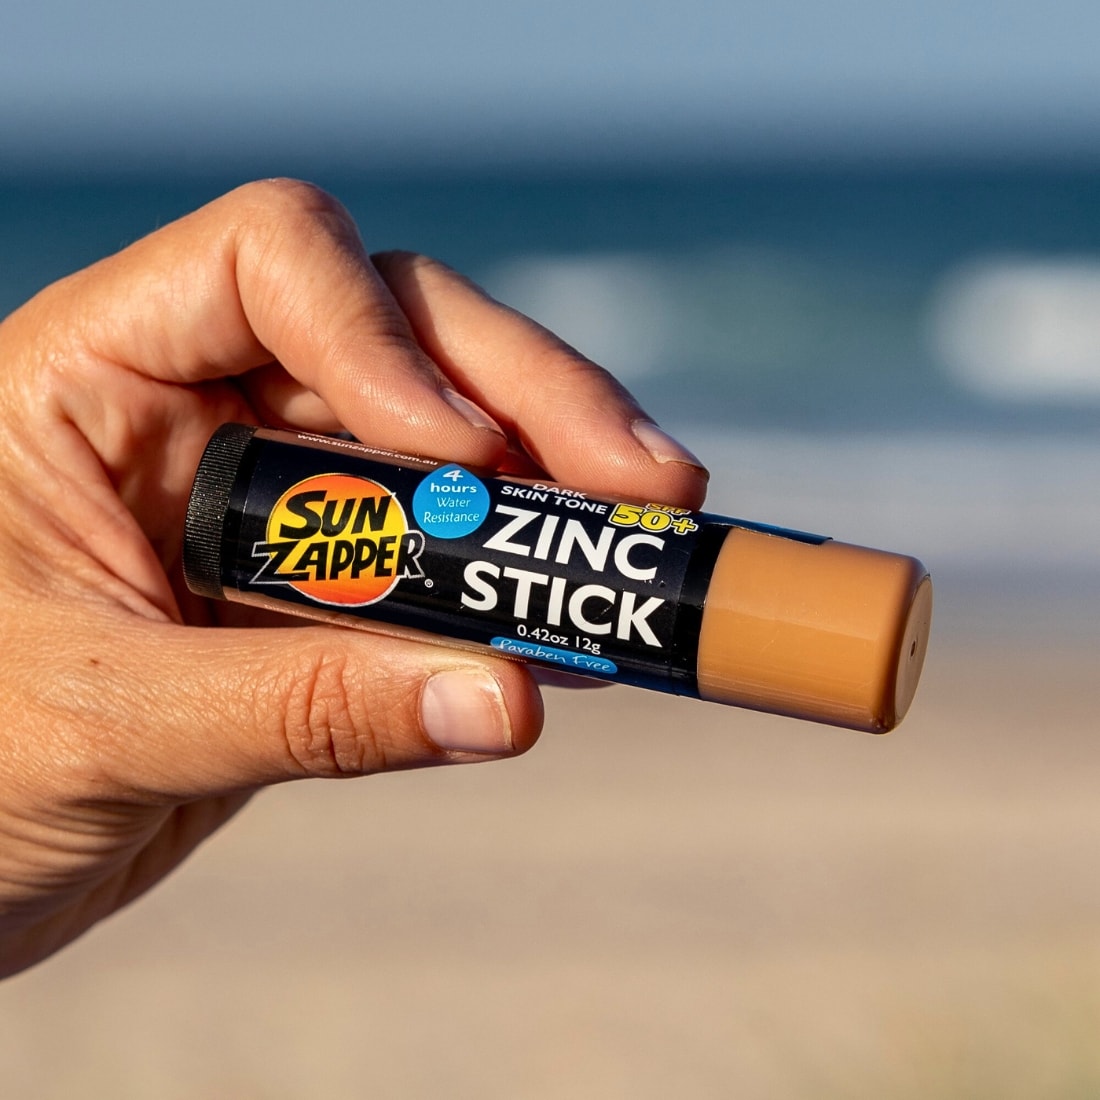 Sun Zapper Coloured Spf 50+ Zinc Stick - Dark Skin Tone - Sunscreen by Sun Zapper 12g